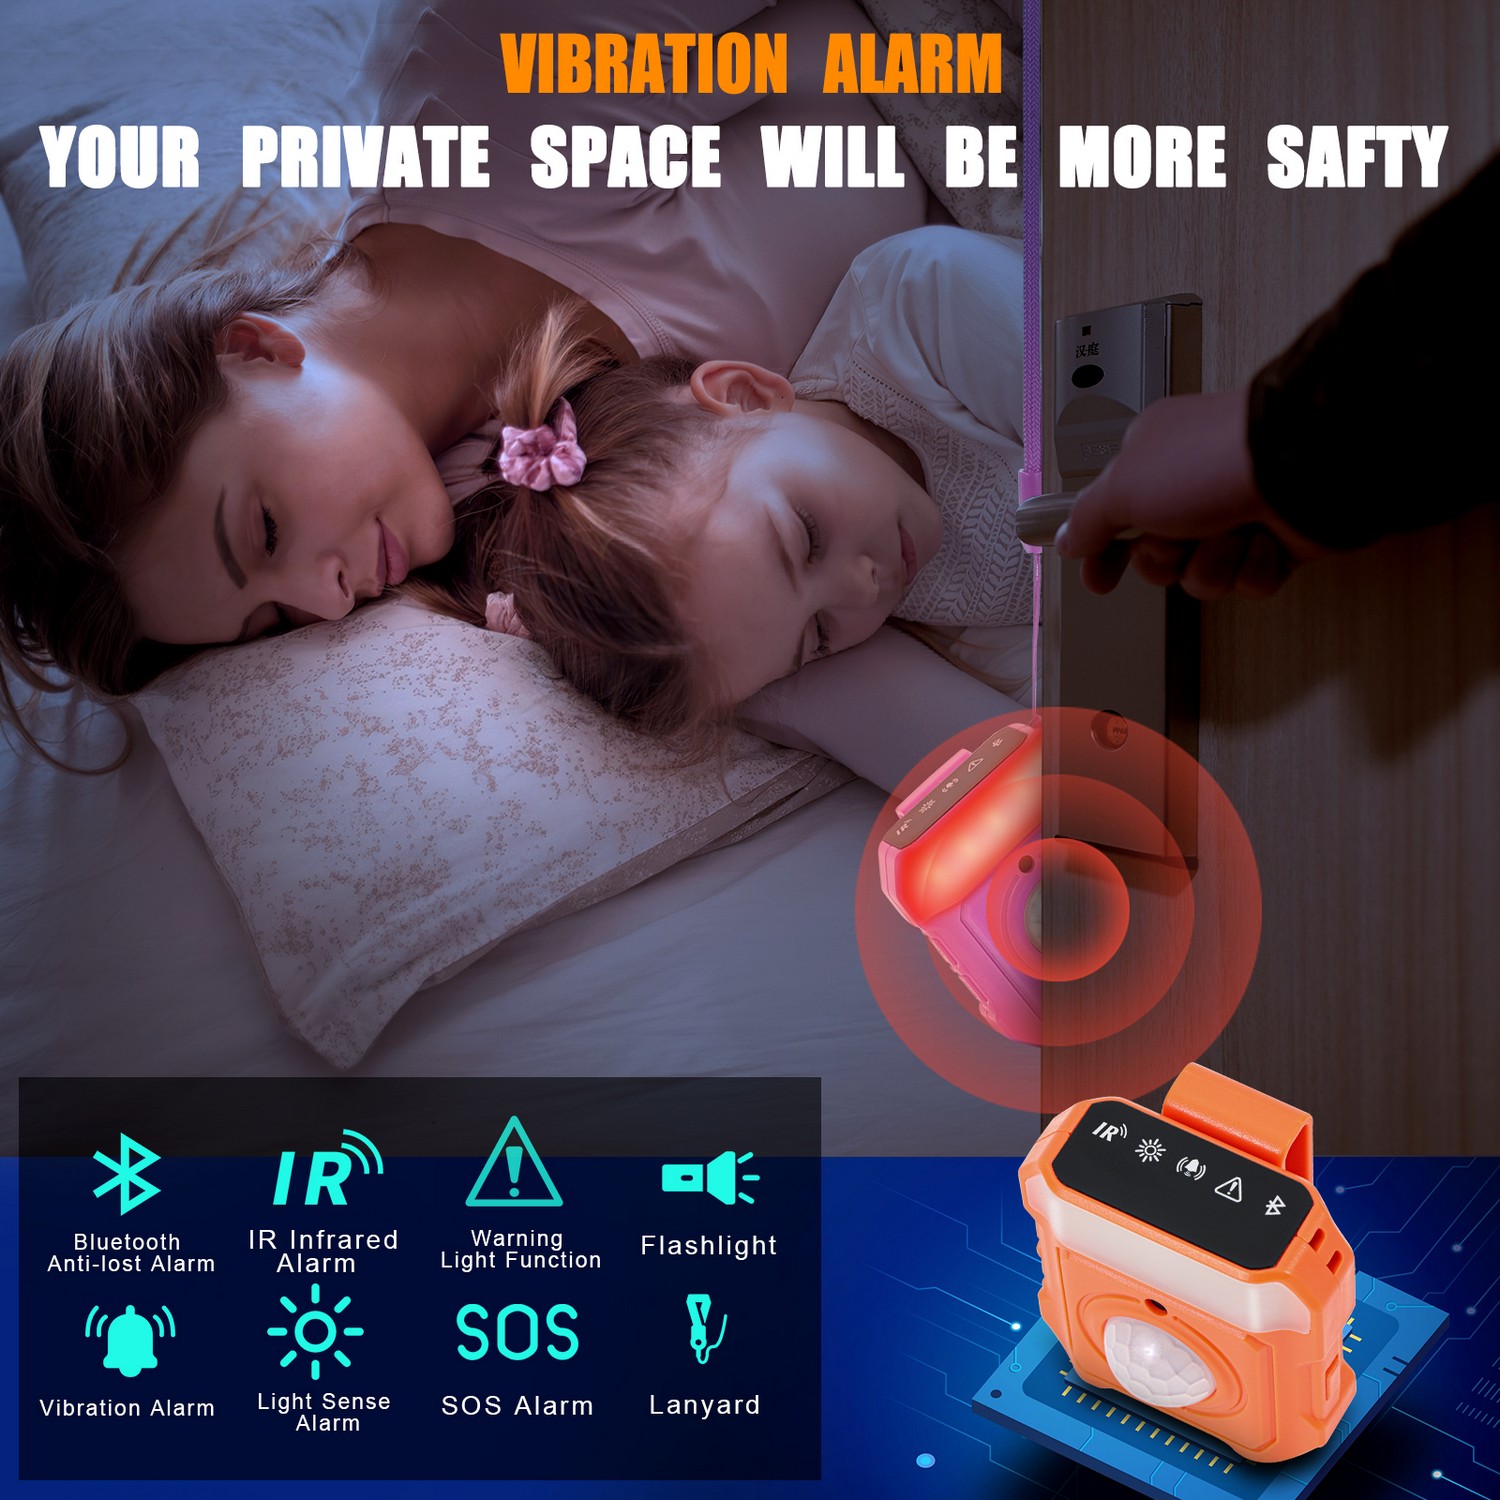 alarma de seguridad personal - alarma vibratoria